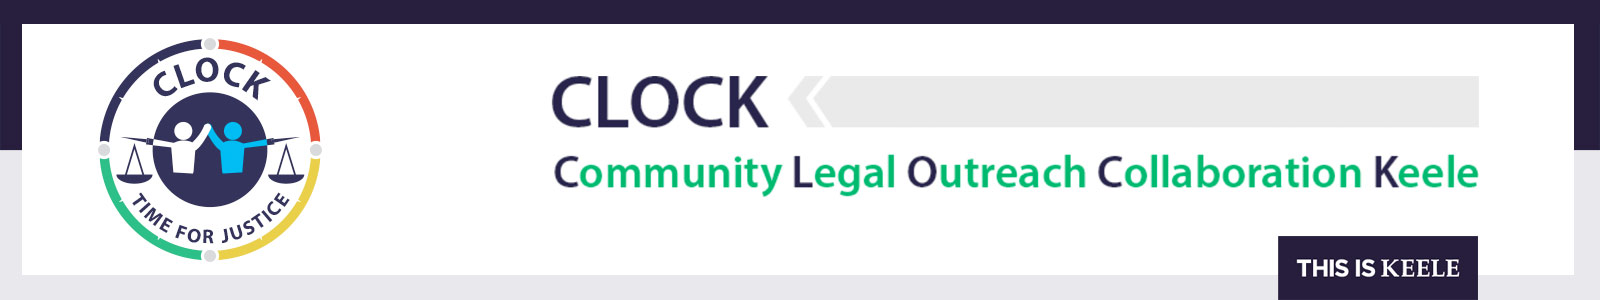 Legal Outreach Collaboration banner